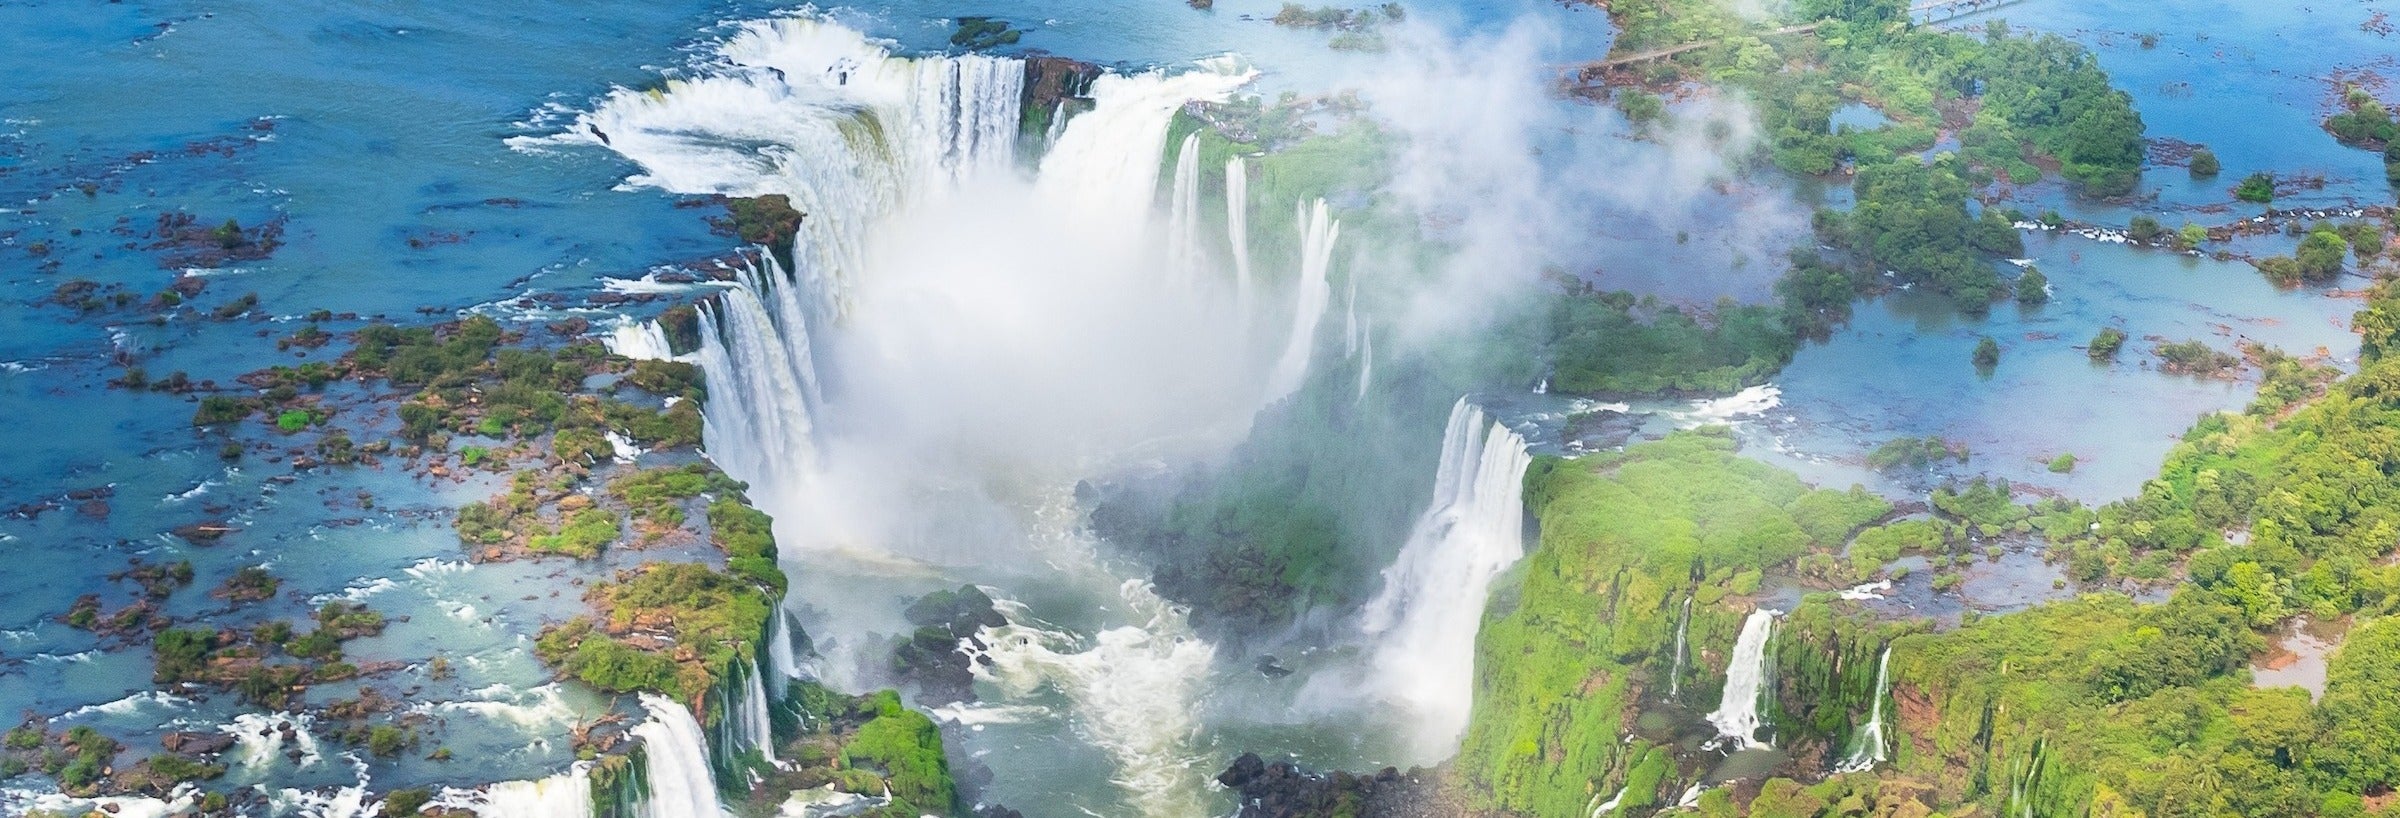 Iguazu Falls Tours & Activities